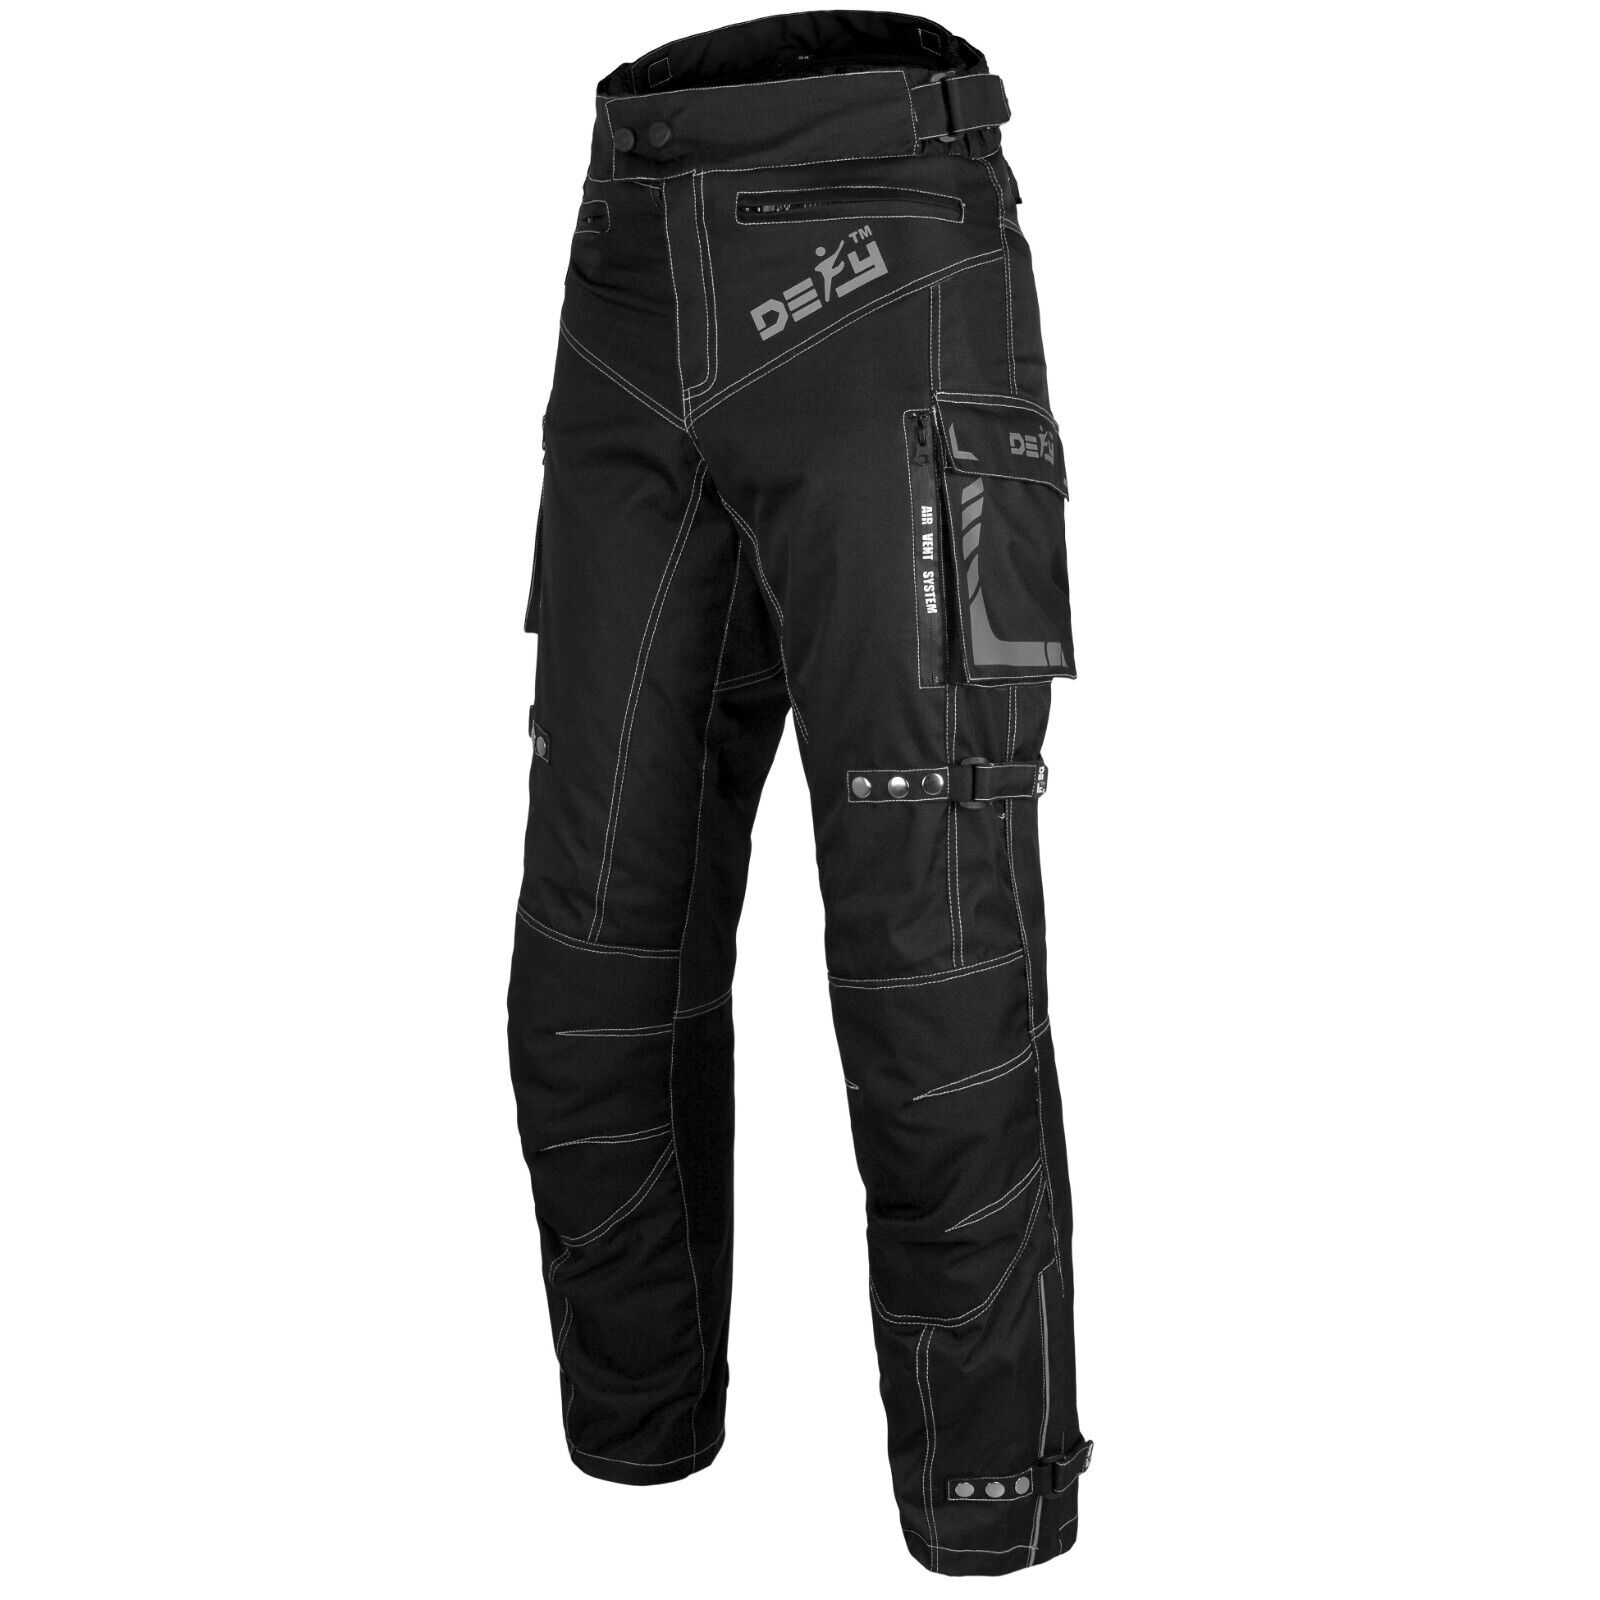 DEFY Motorcycle Pants for Men Water Resistant Dual Sport CE Armor Cordura Fabric